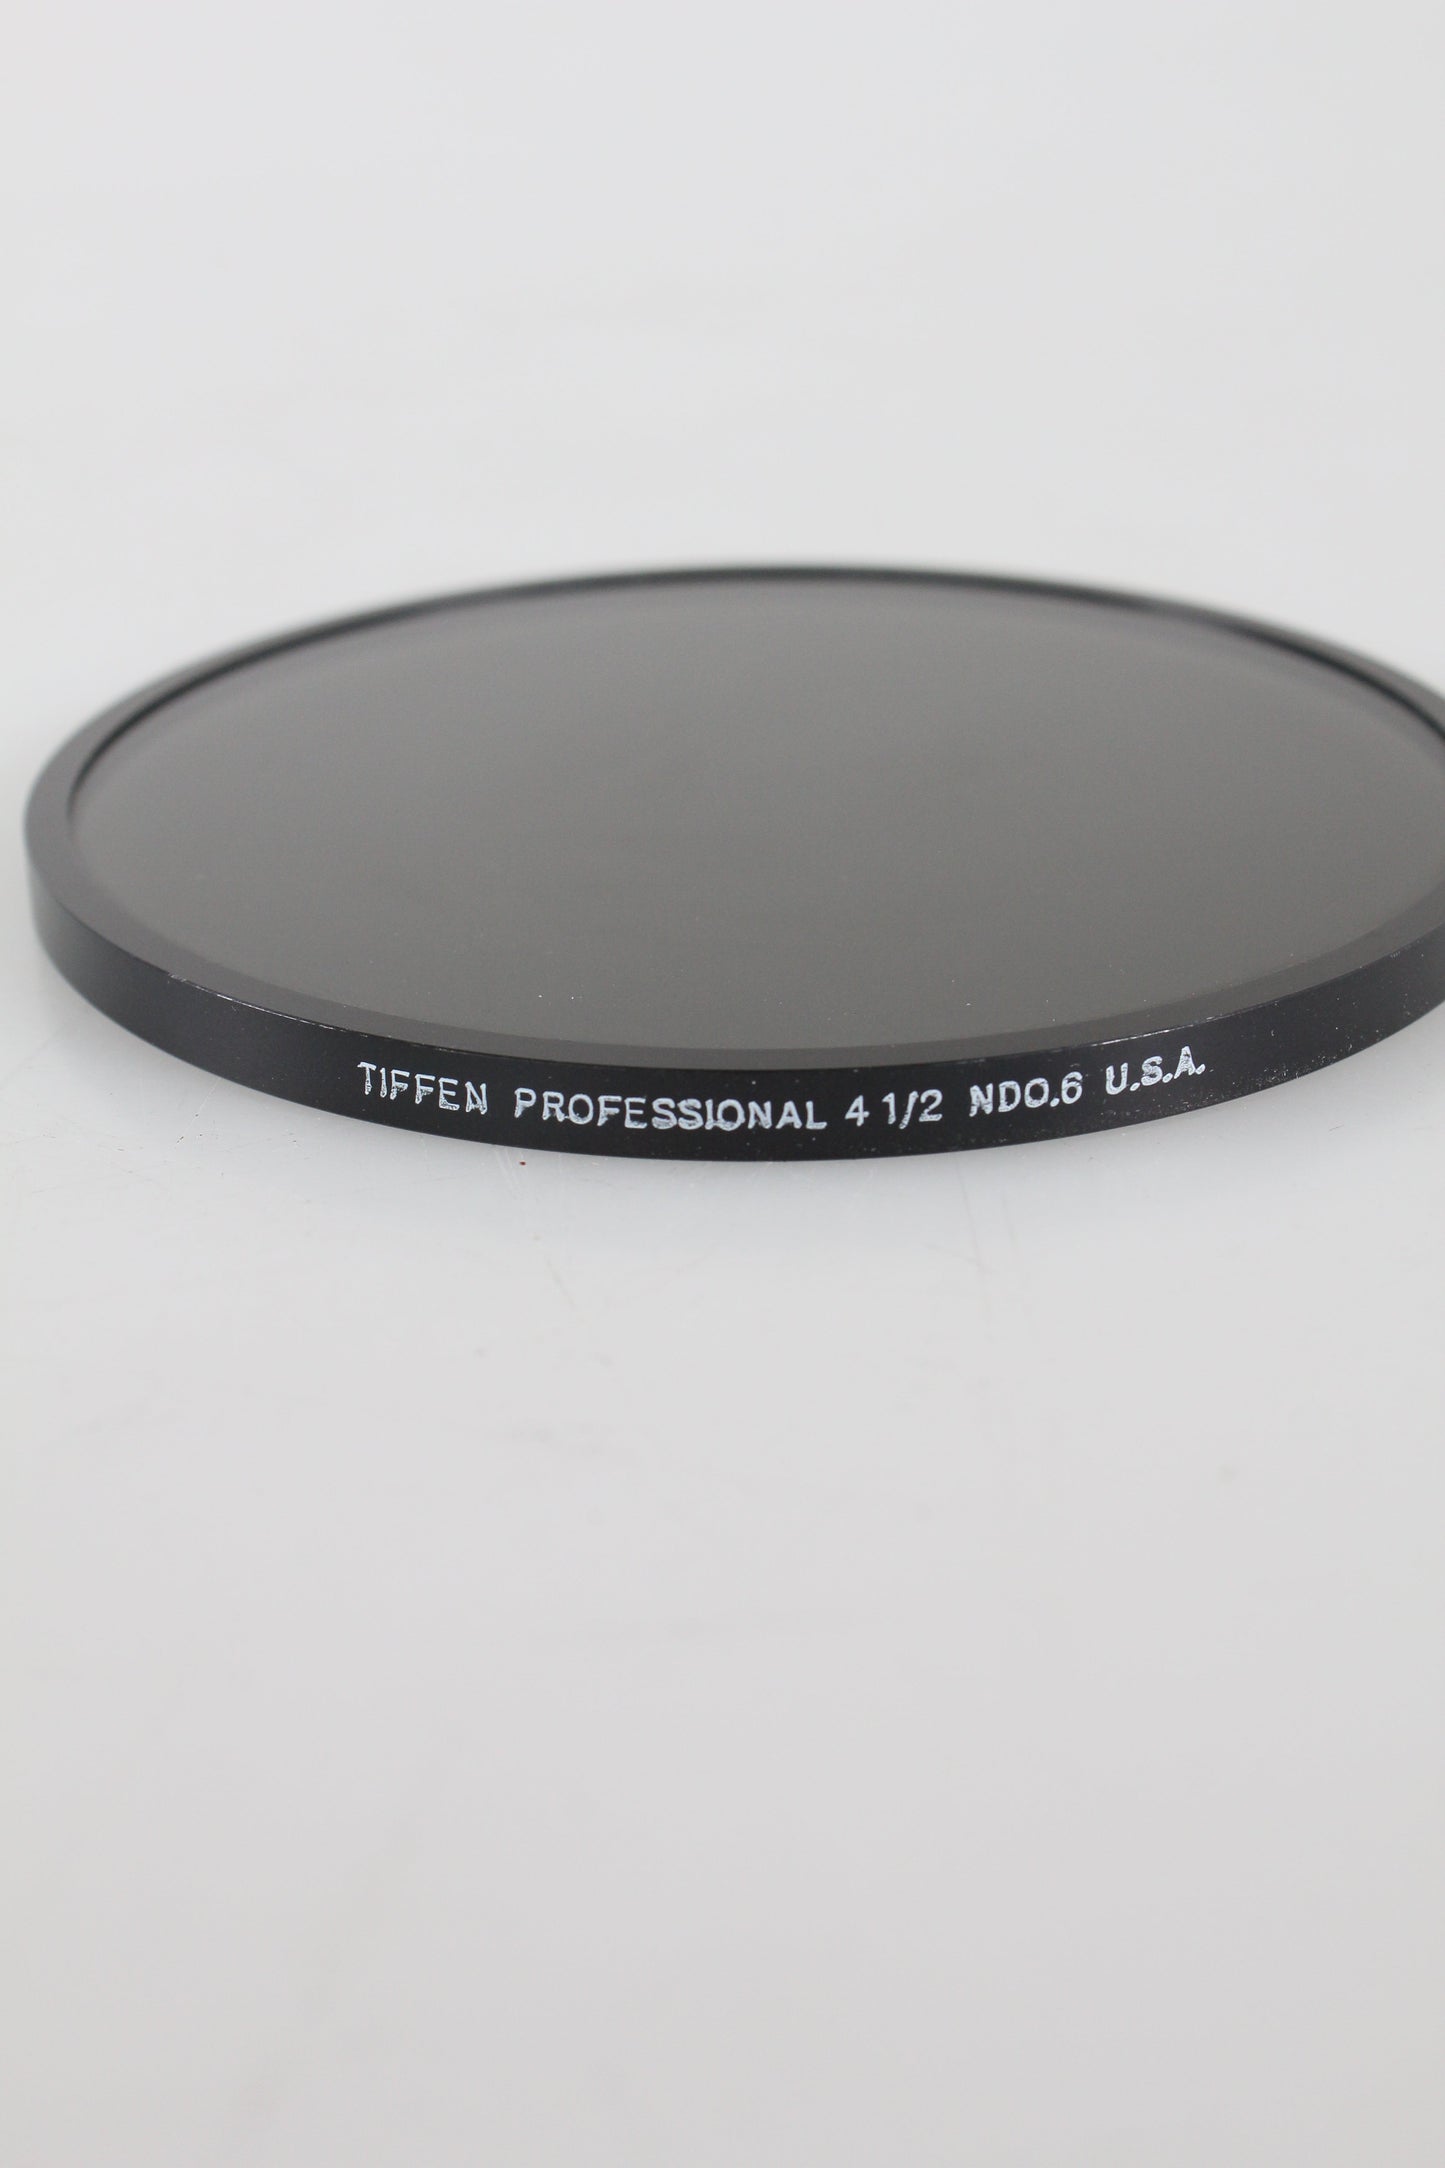 Tiffen 4 1/2 inch round ND0.6 CAMERA GLASS FILTER neutral density ND